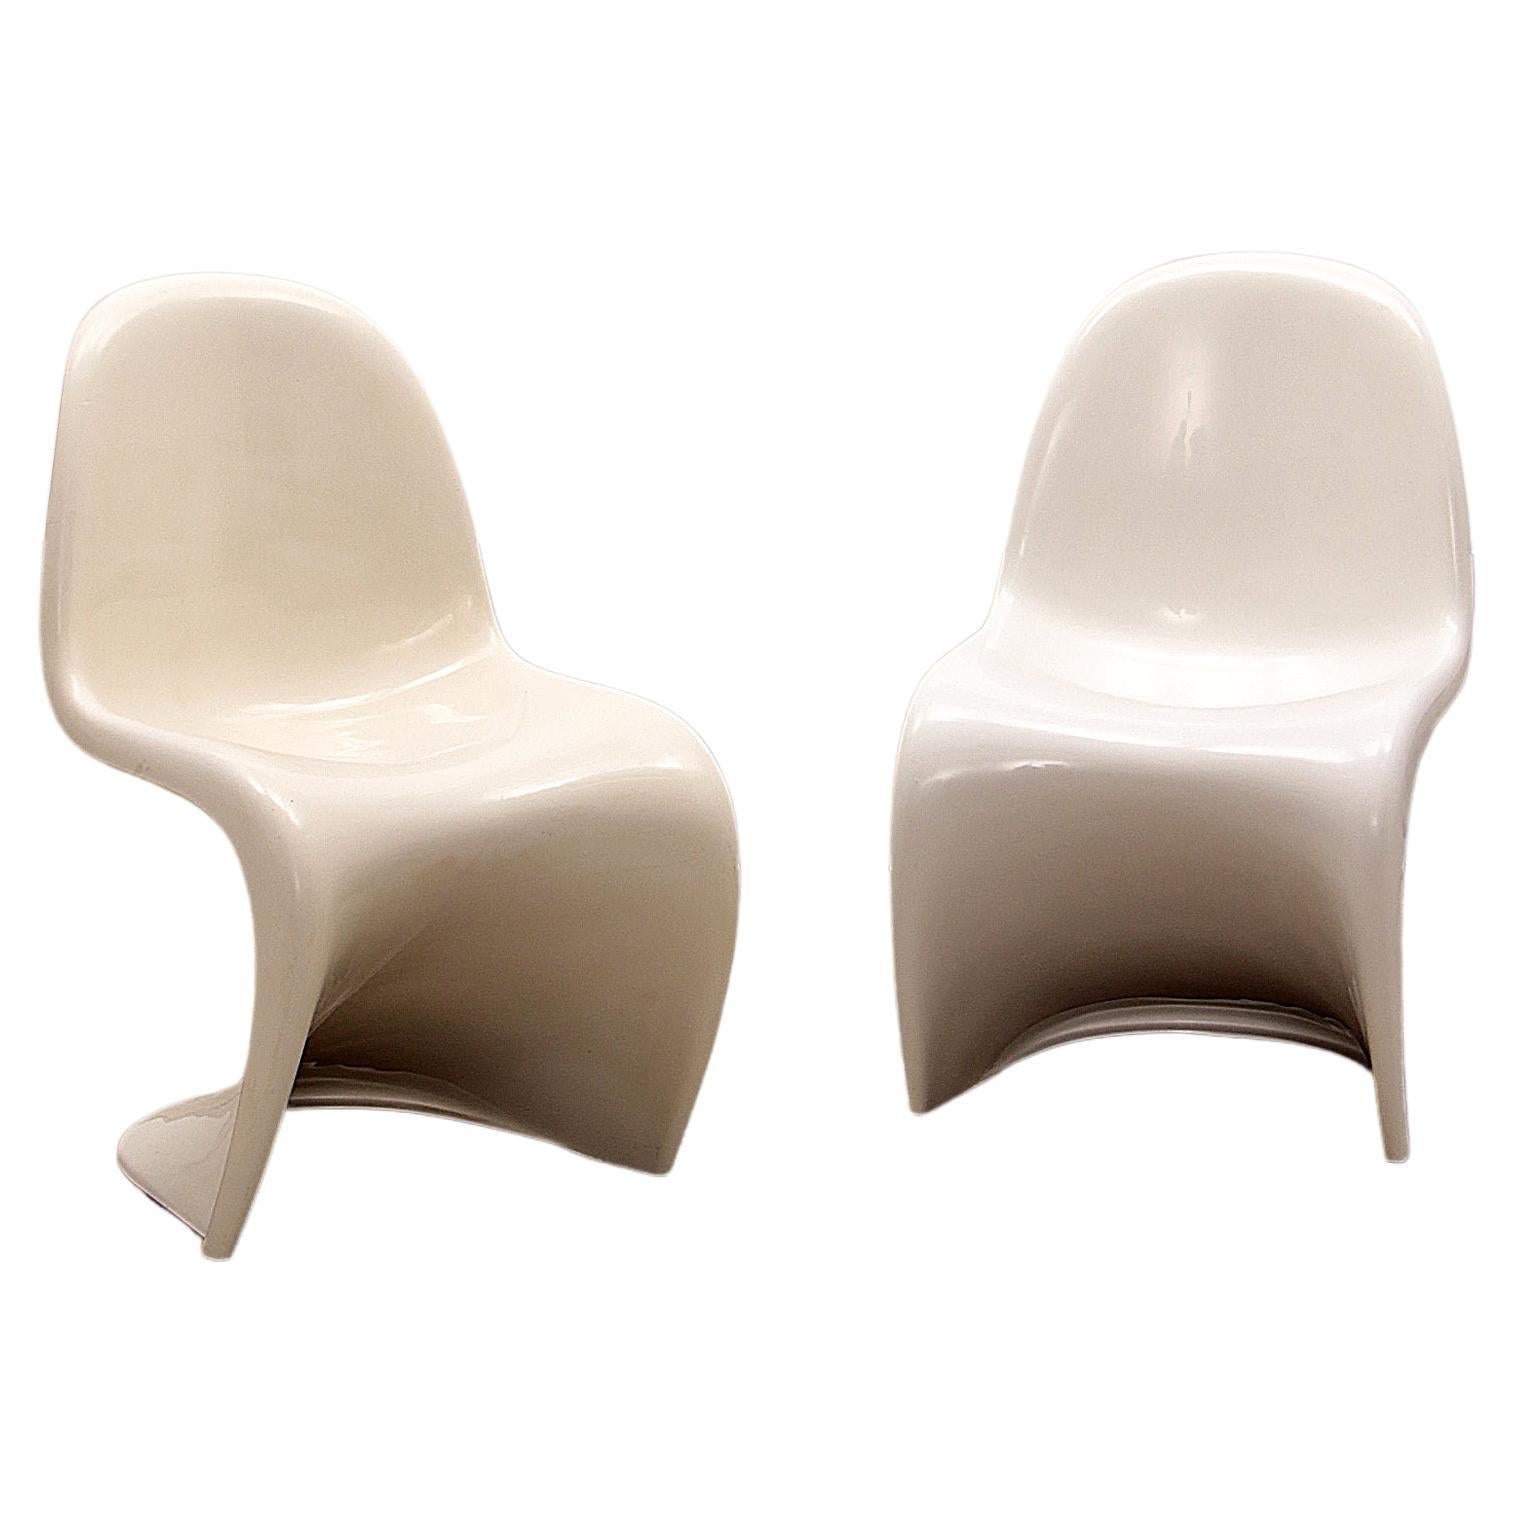 Set of 2 Verner Panton Chairs Made by Herman Miller, 1971